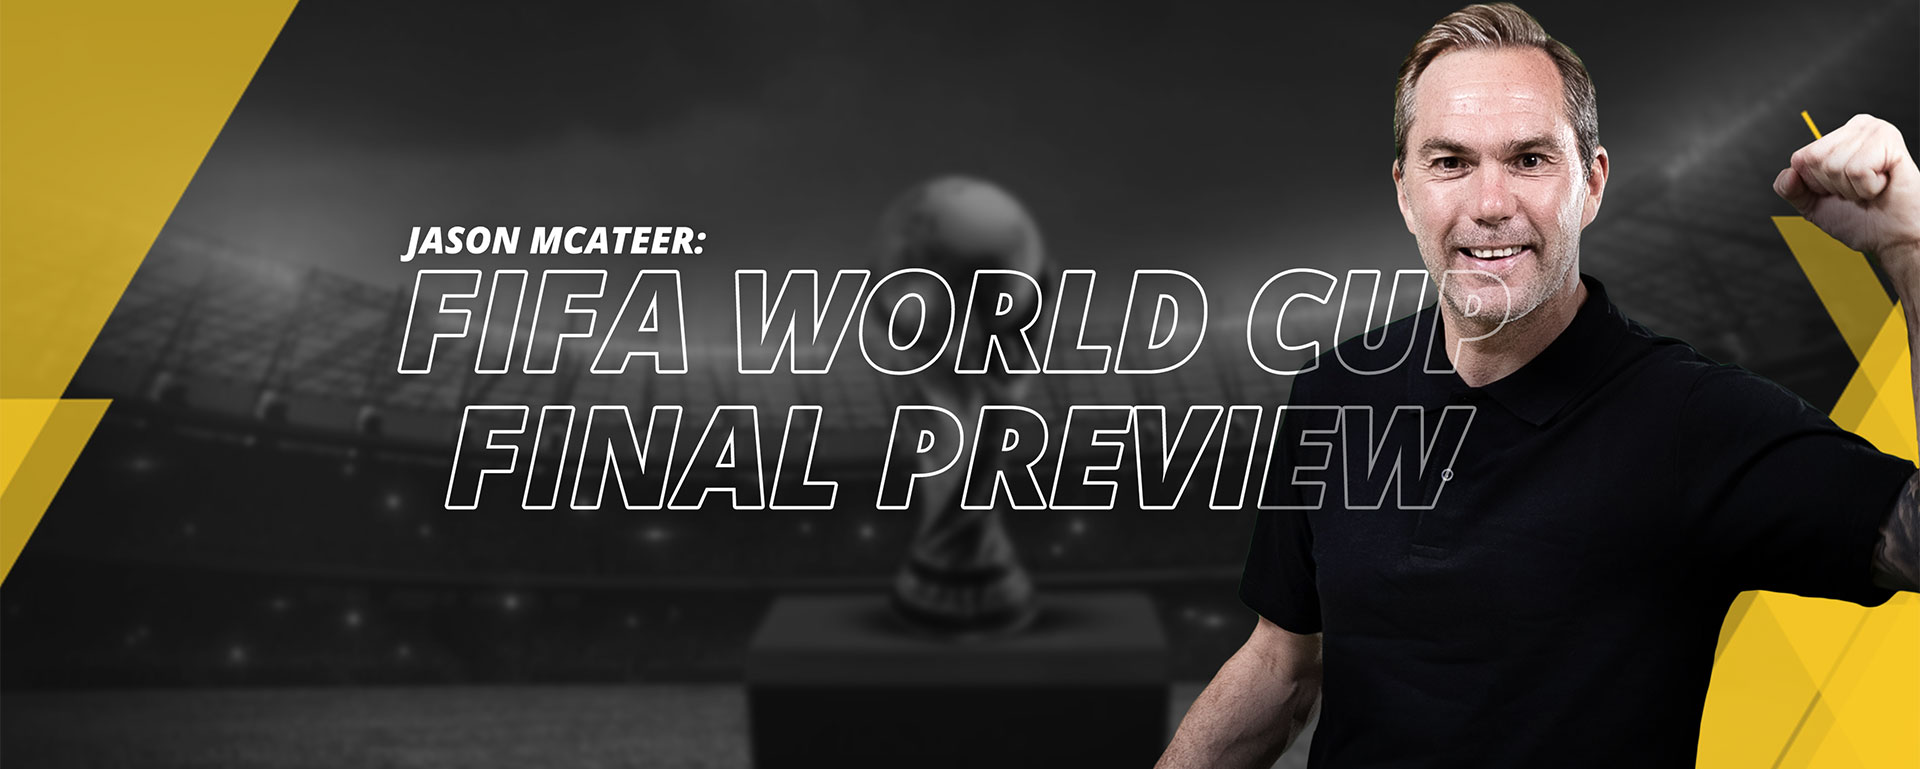 Jason McAteer – World Cup Final Preview